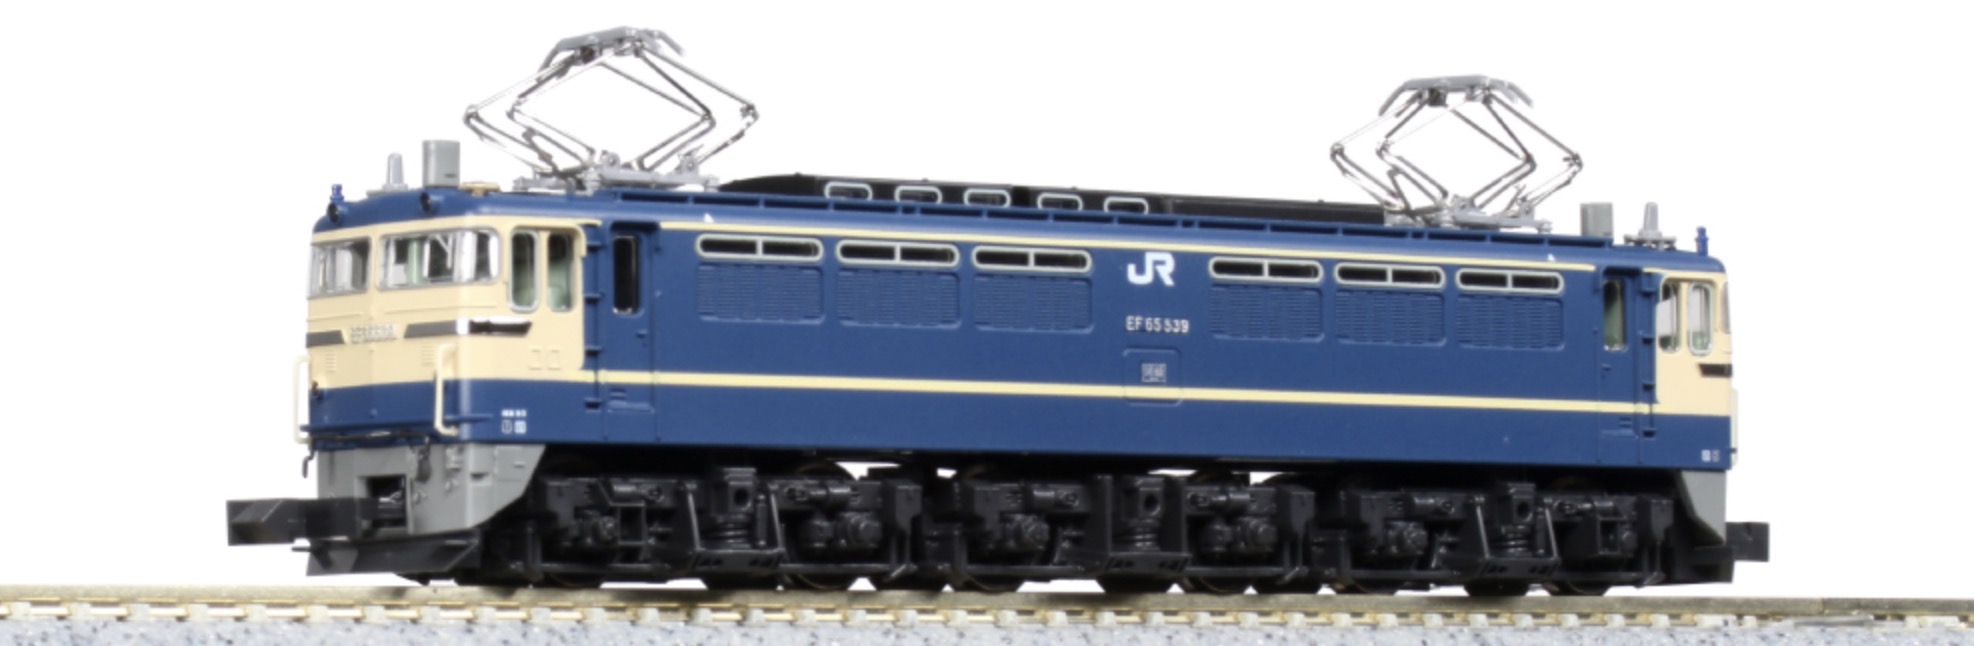 N Scale - Kato - 3060-3 - Locomotive, Electric, Type EF65-500P - Japan Railways Freight - EF65 539